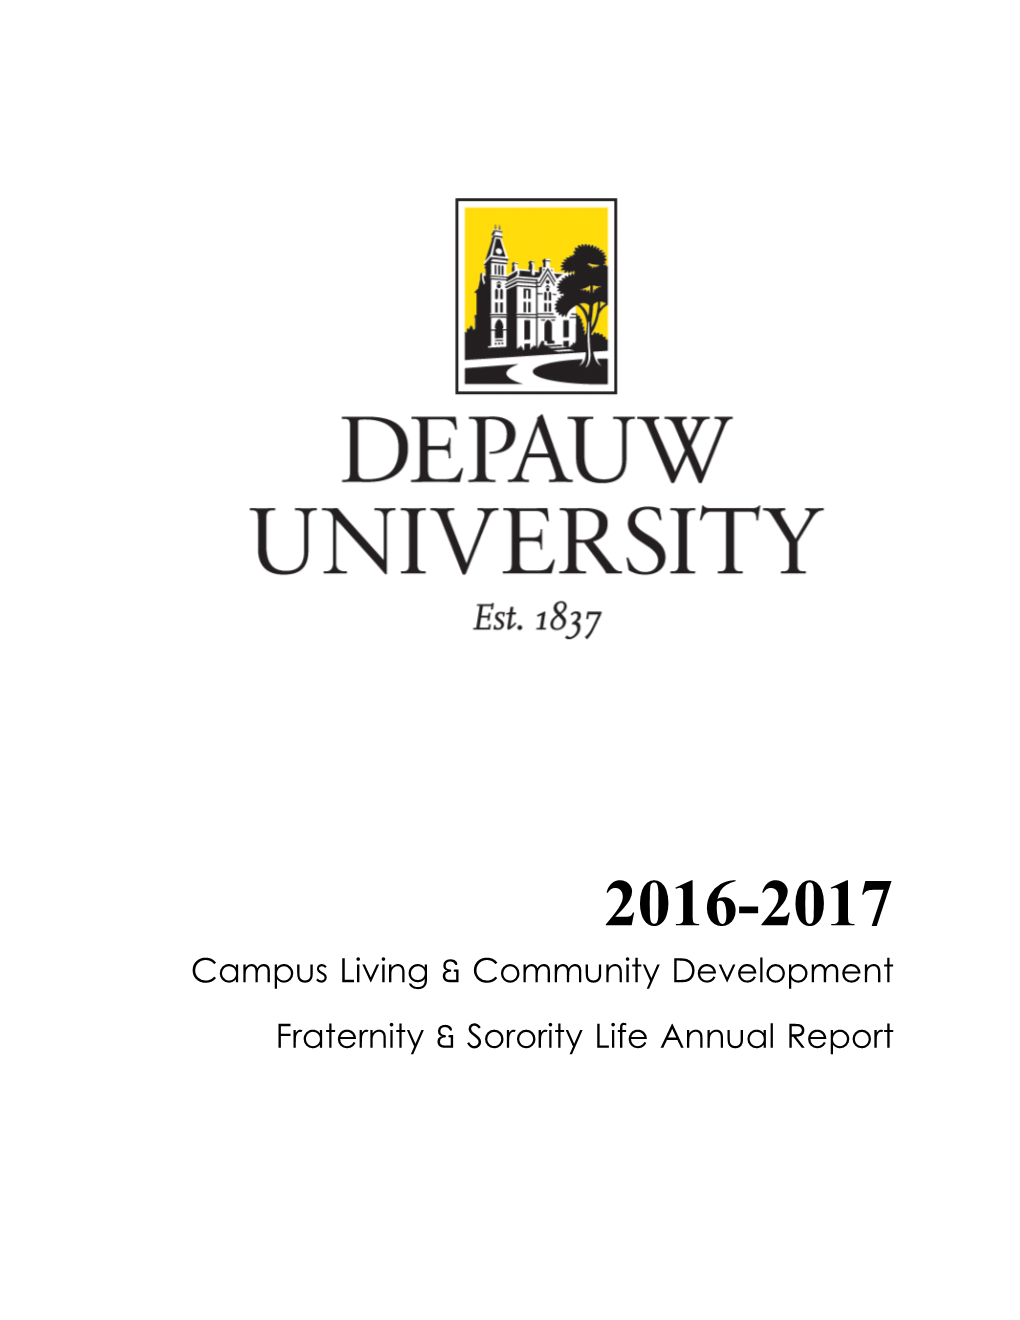 Campus Living & Community Development Fraternity & Sorority